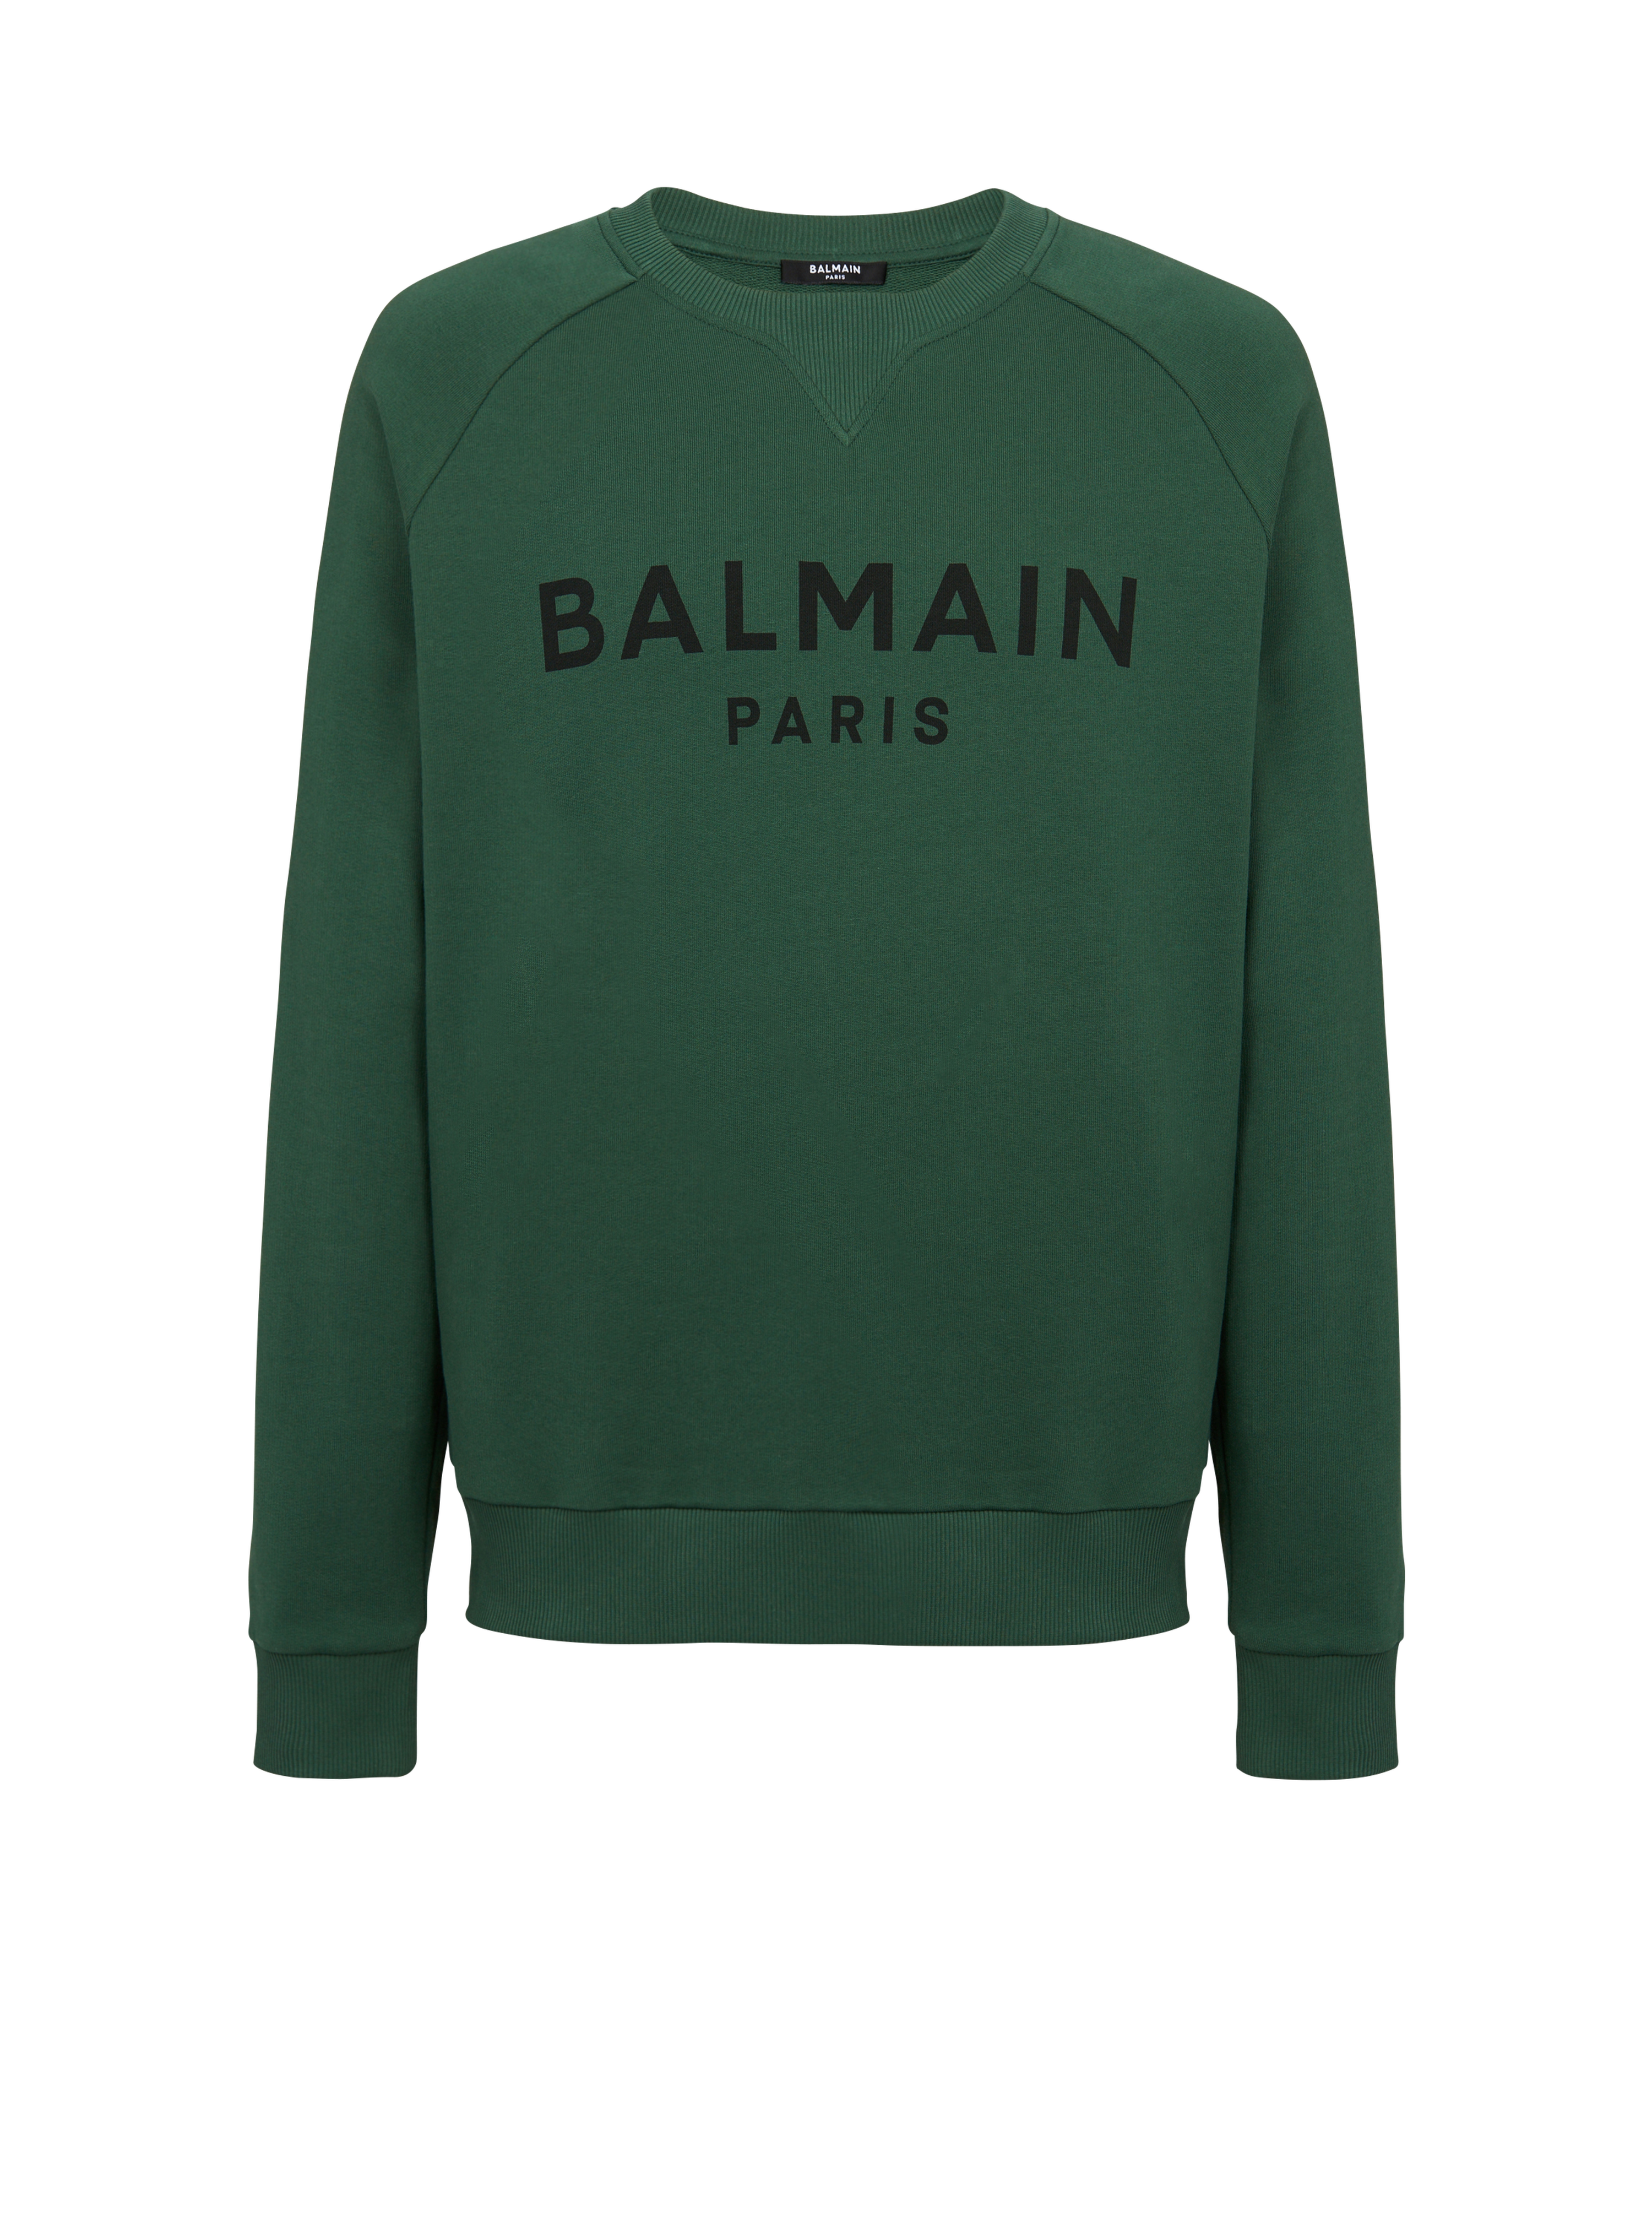 Eco-designed cotton sweatshirt with Balmain Paris logo print, green